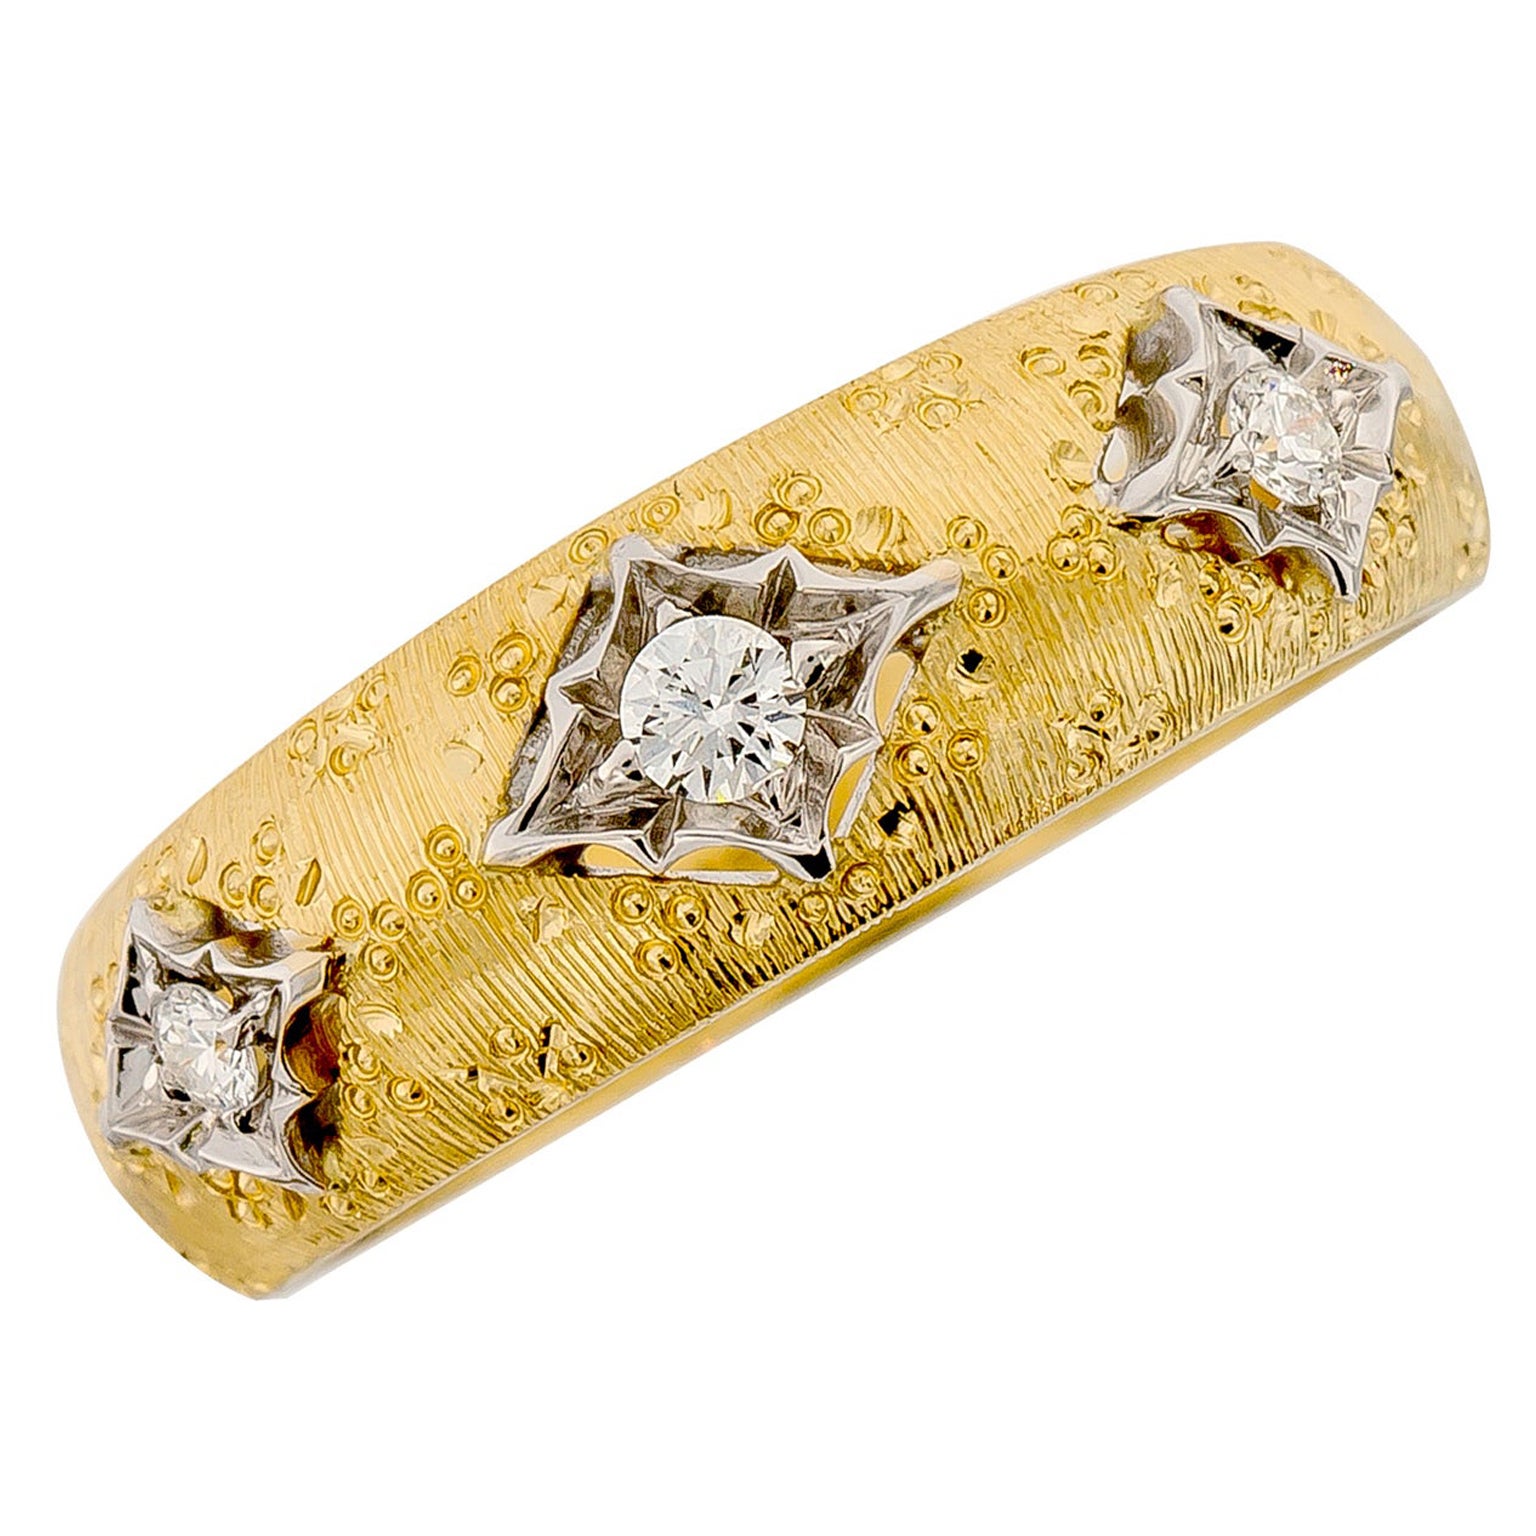 Italian 18 Karat Yellow Gold and Diamond Dome Band Ring